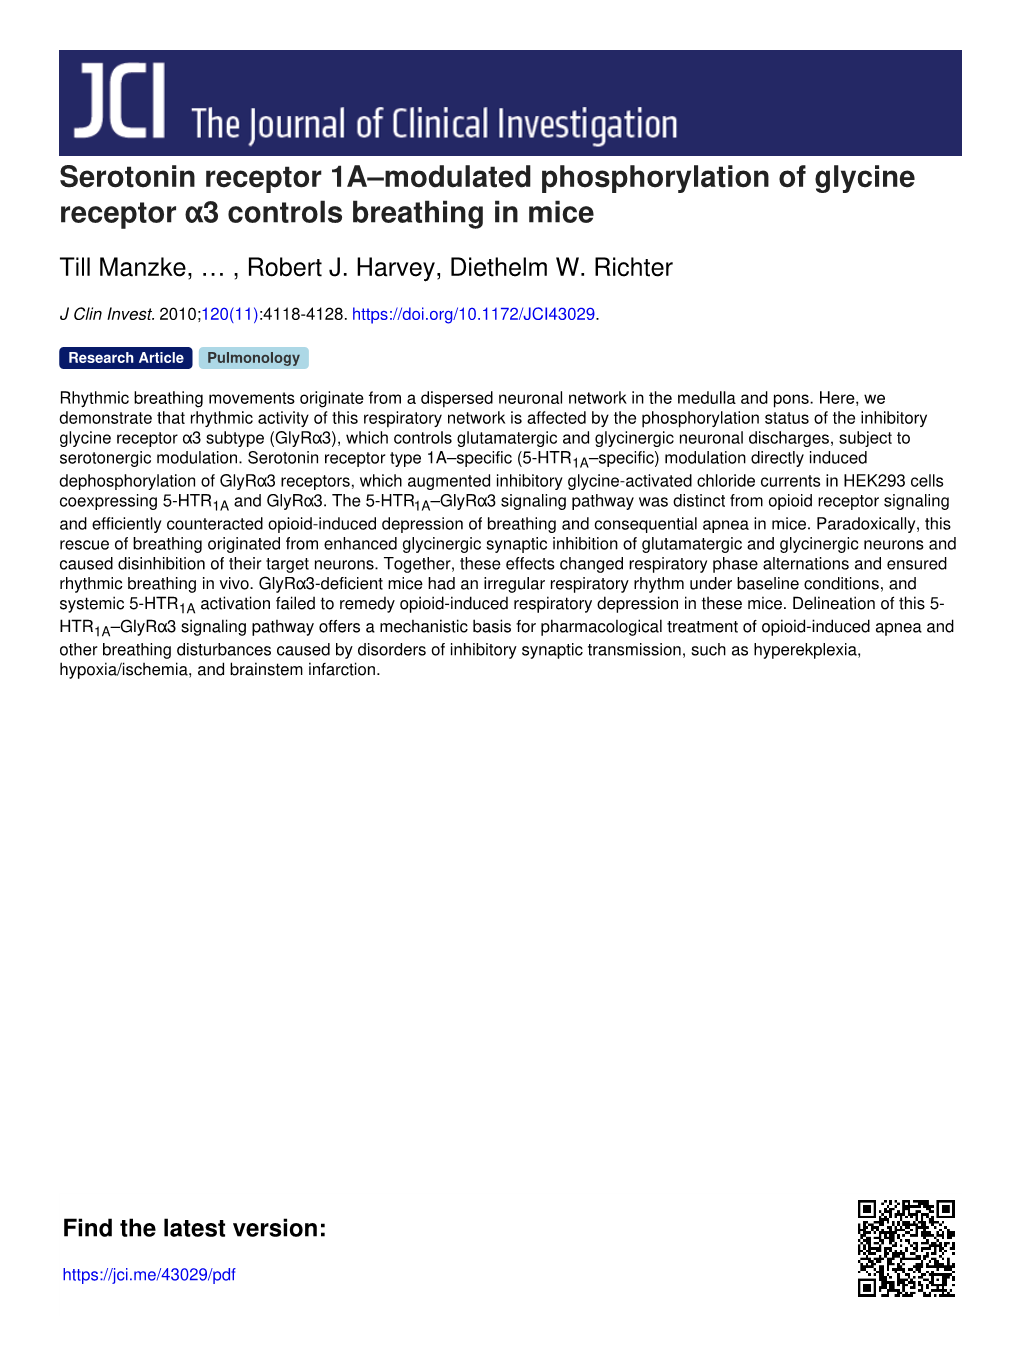 Serotonin Receptor 1A–Modulated Phosphorylation of Glycine Receptor Α3 Controls Breathing in Mice